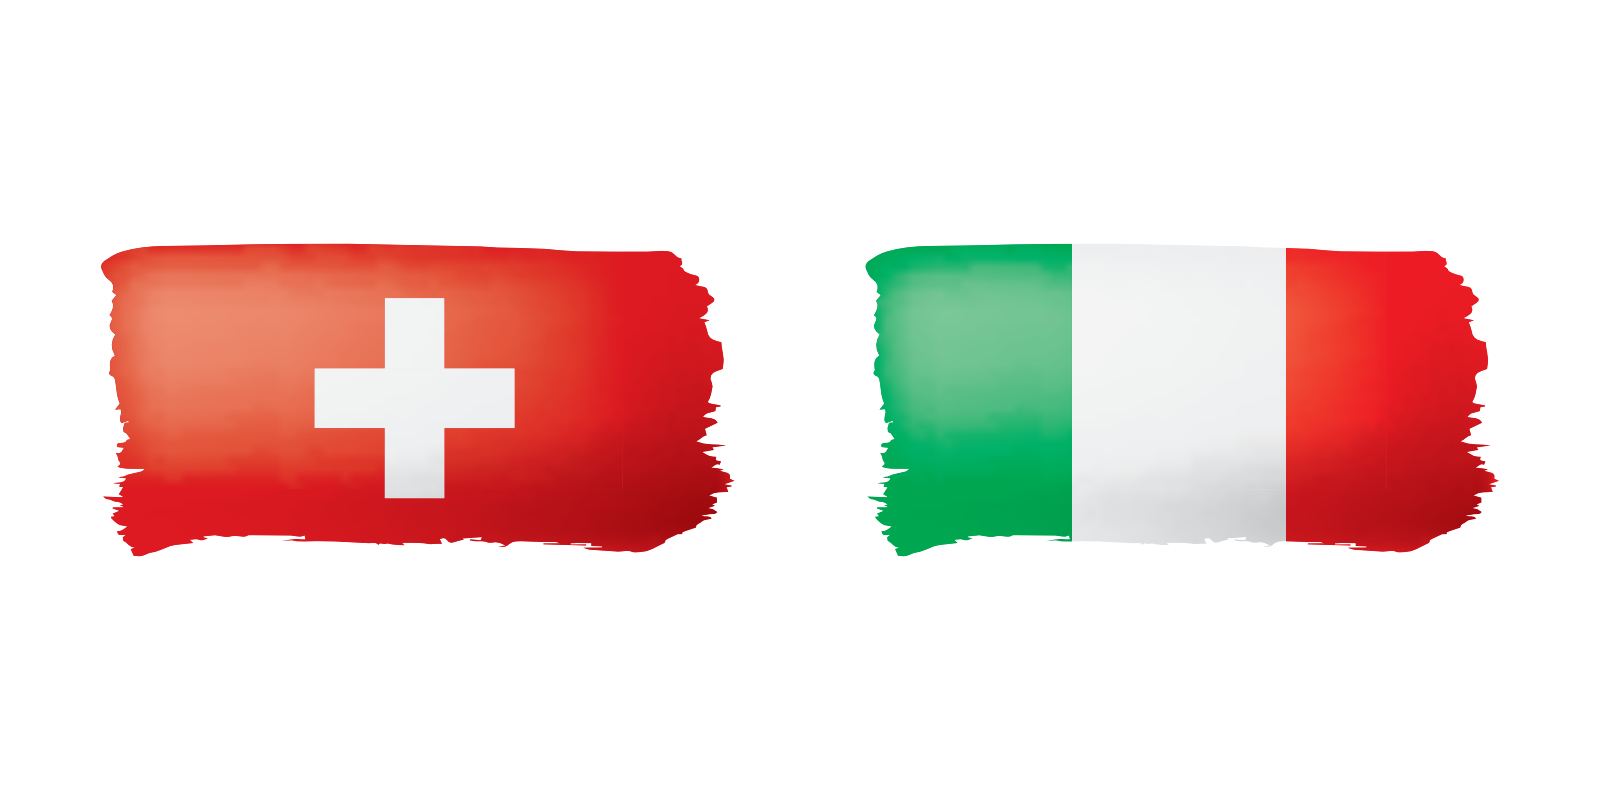 Svizzera vs Italia